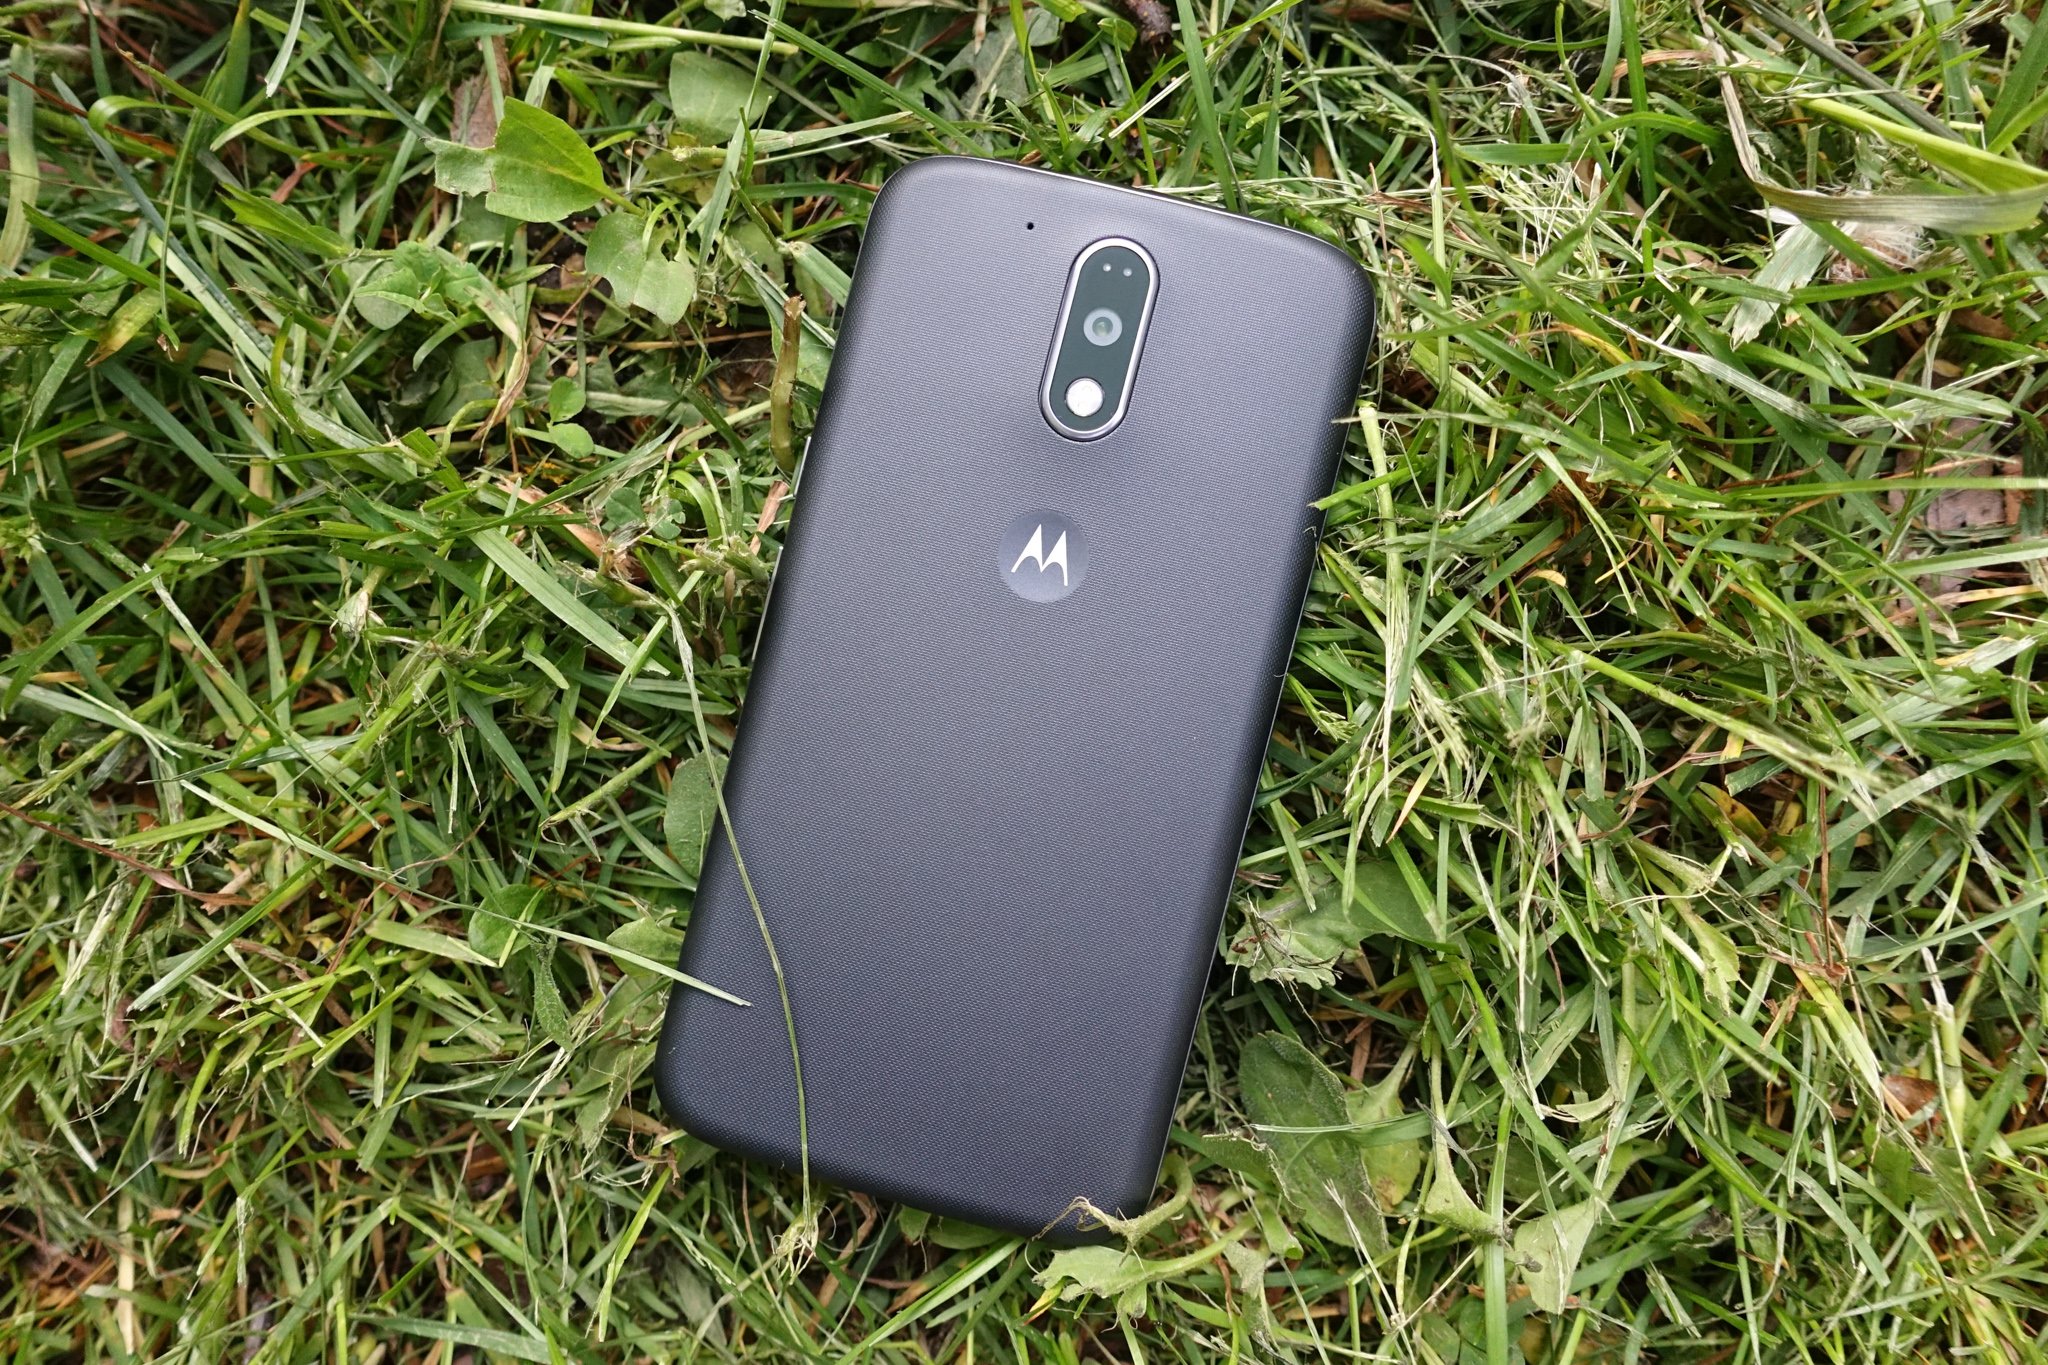 Dijk omdraaien Bevatten Moto G4 Plus review: A memorable upgrade | Android Central